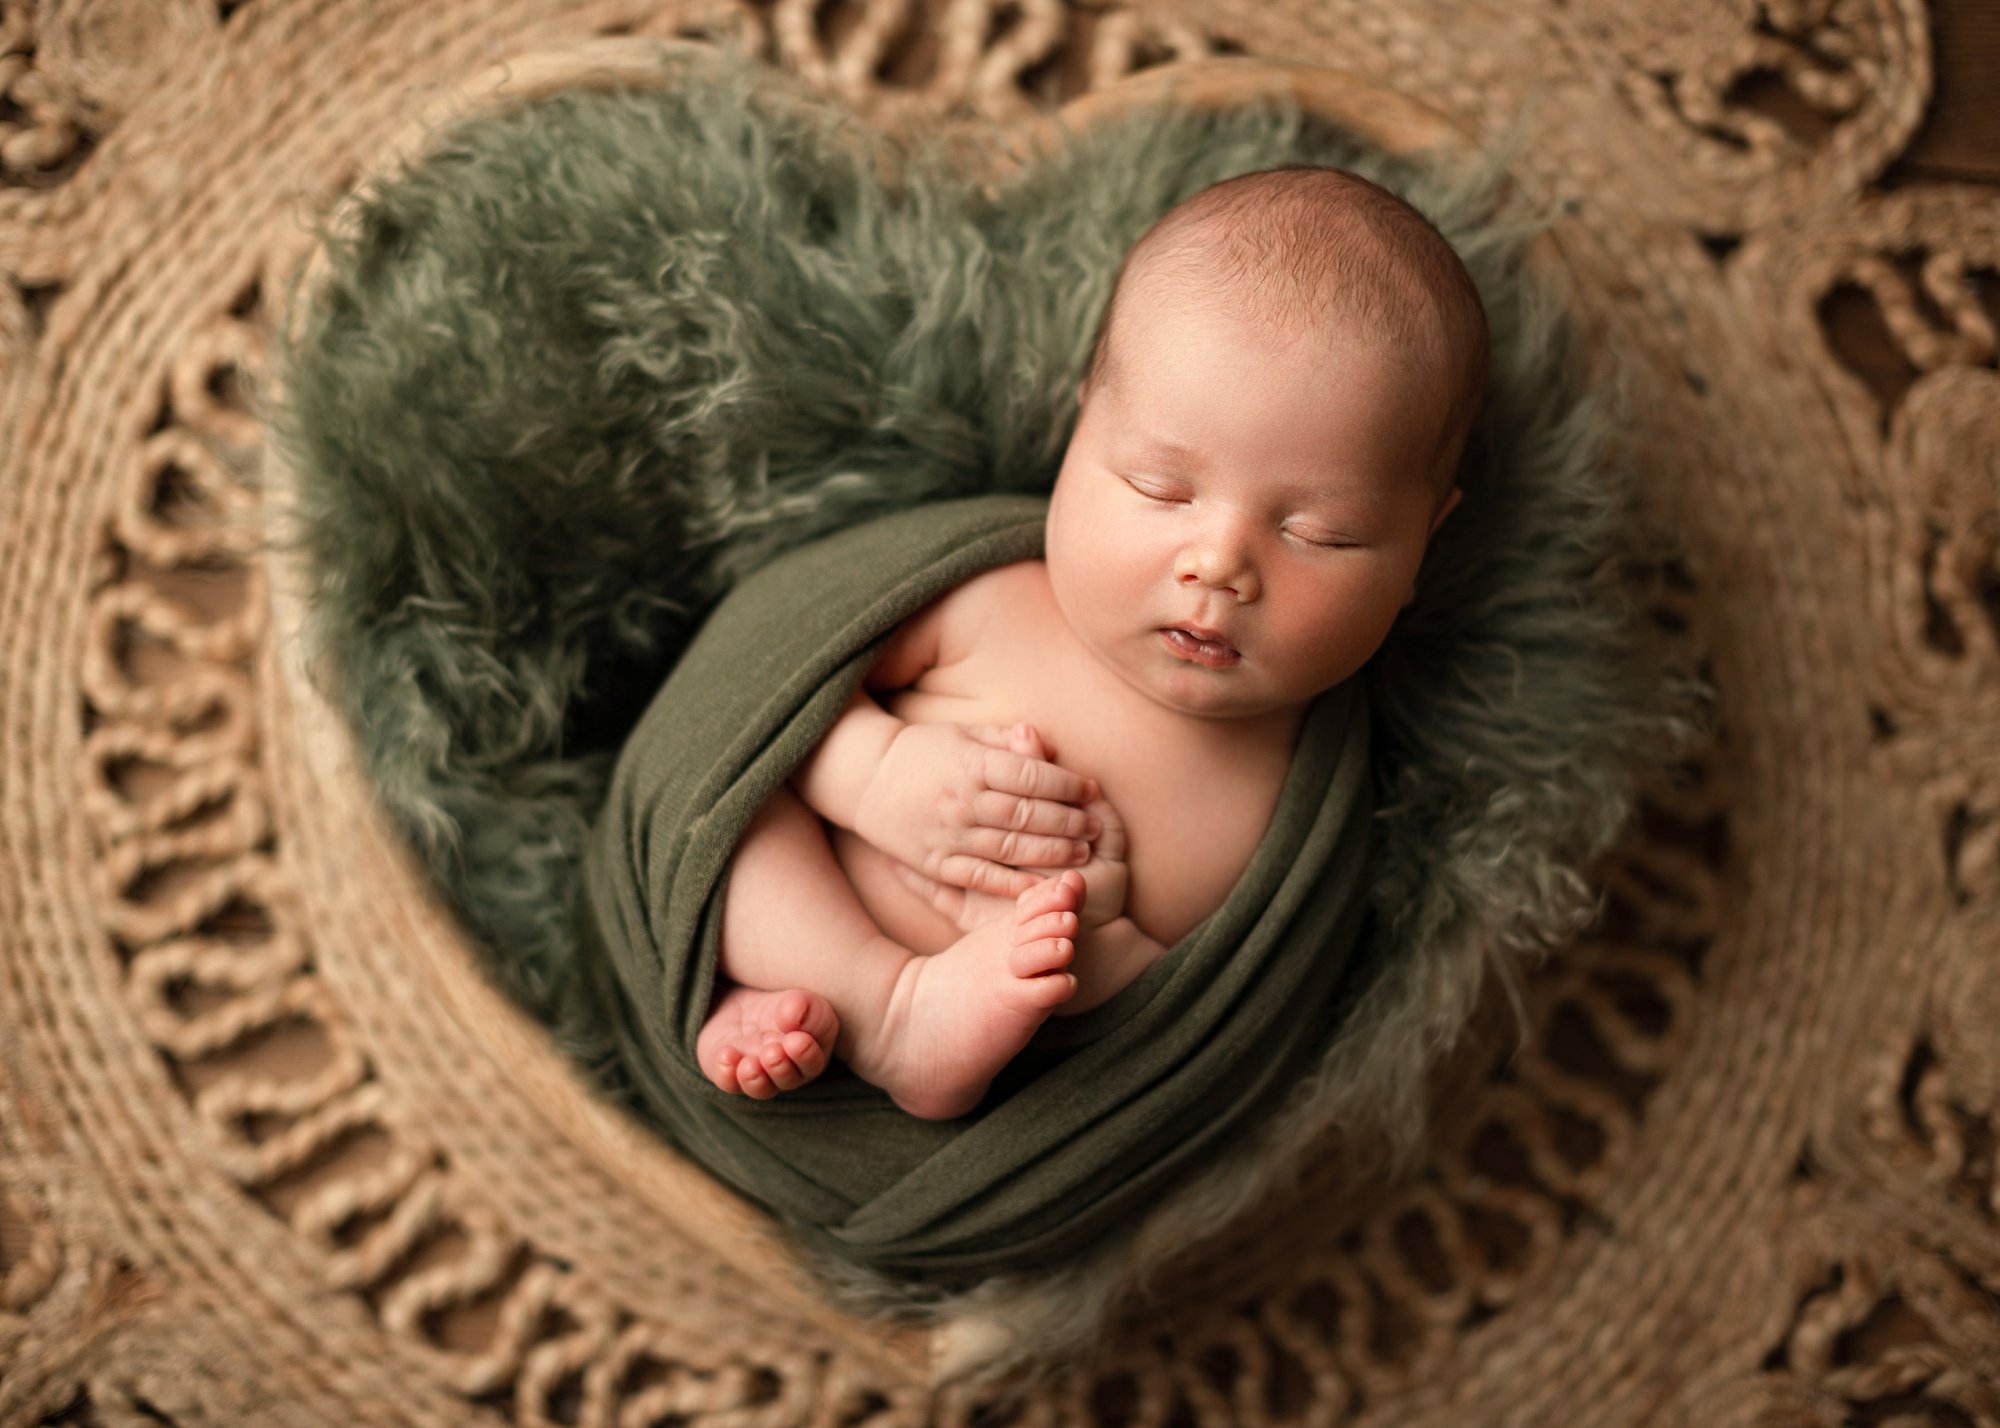 newborn baby in heart basket with green fur